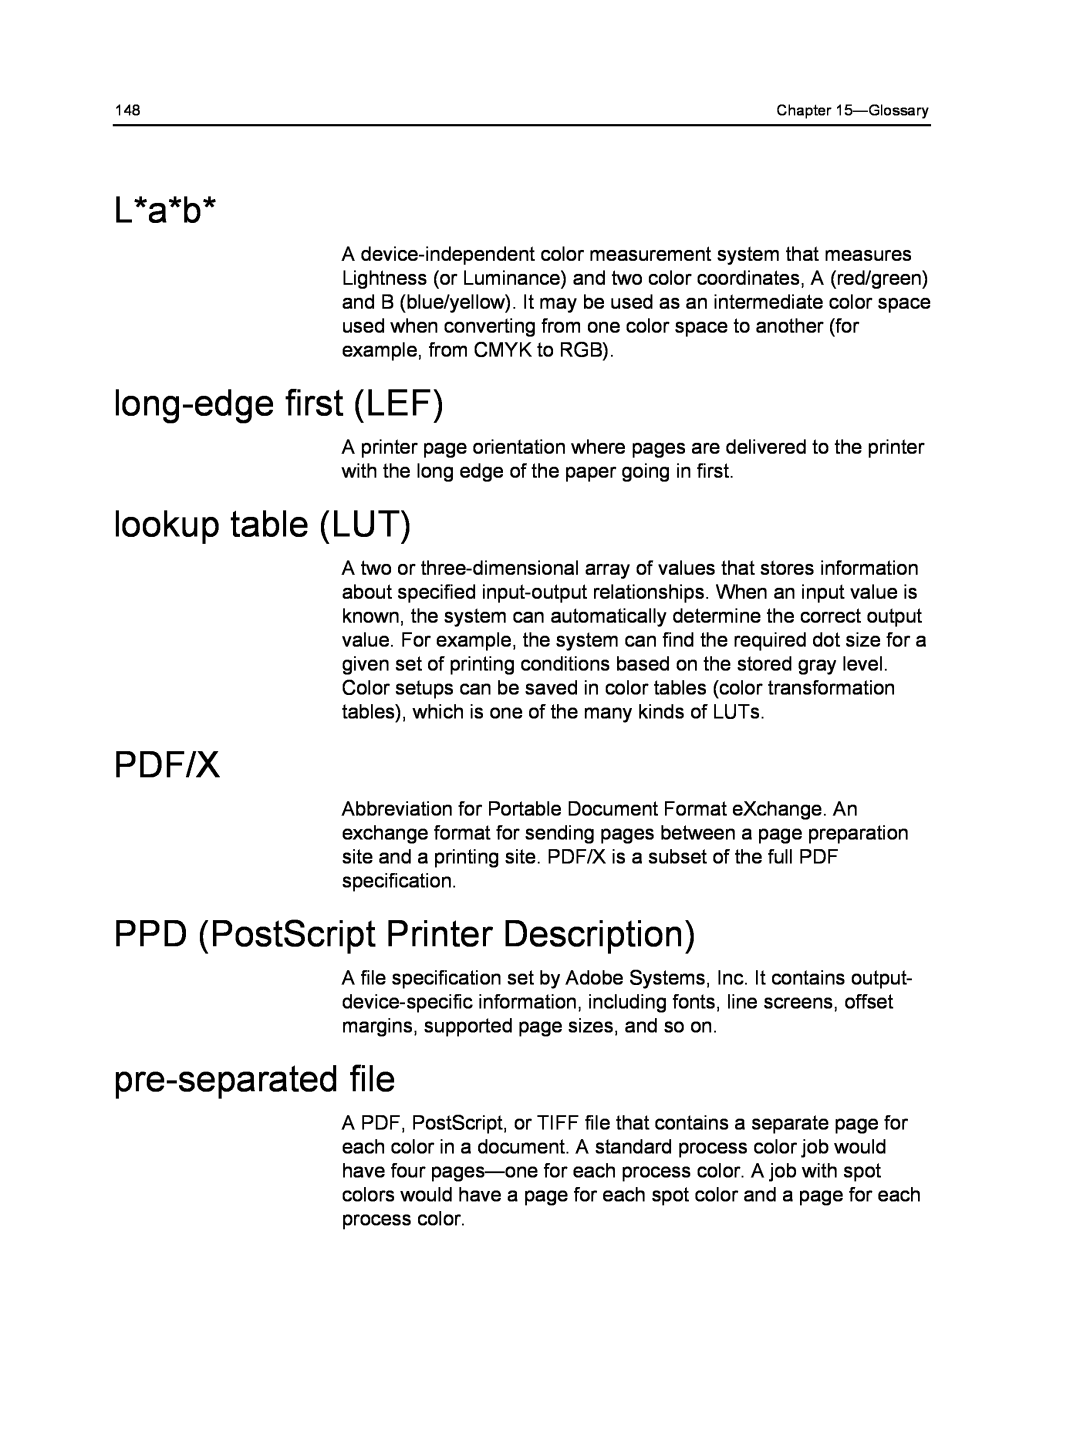 Xerox 560, 550 L*a*b, long-edgefirst LEF, lookup table LUT, Pdf/X, PPD PostScript Printer Description, pre-separatedfile 